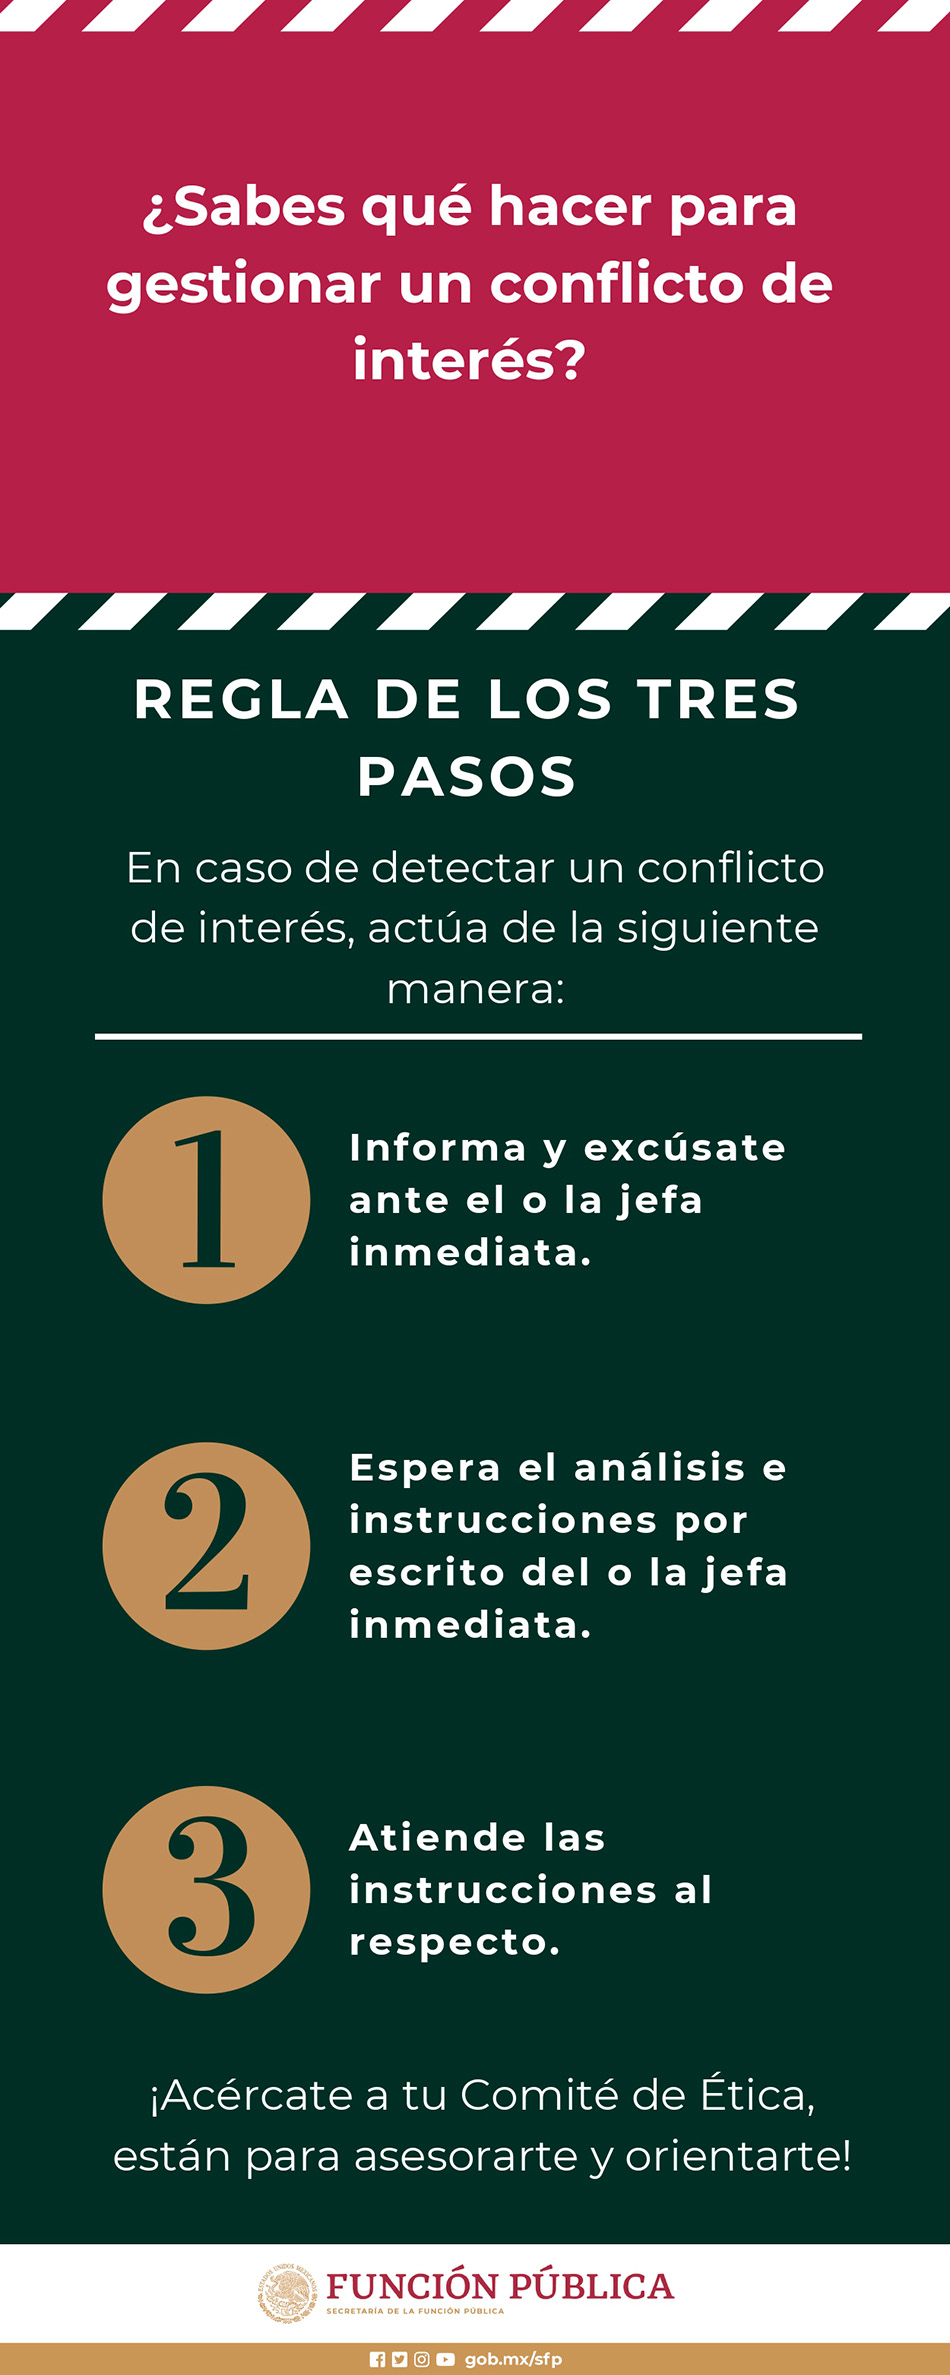 Regla_de_los_tres_pasos_-_Infografia_page-0001.jpg